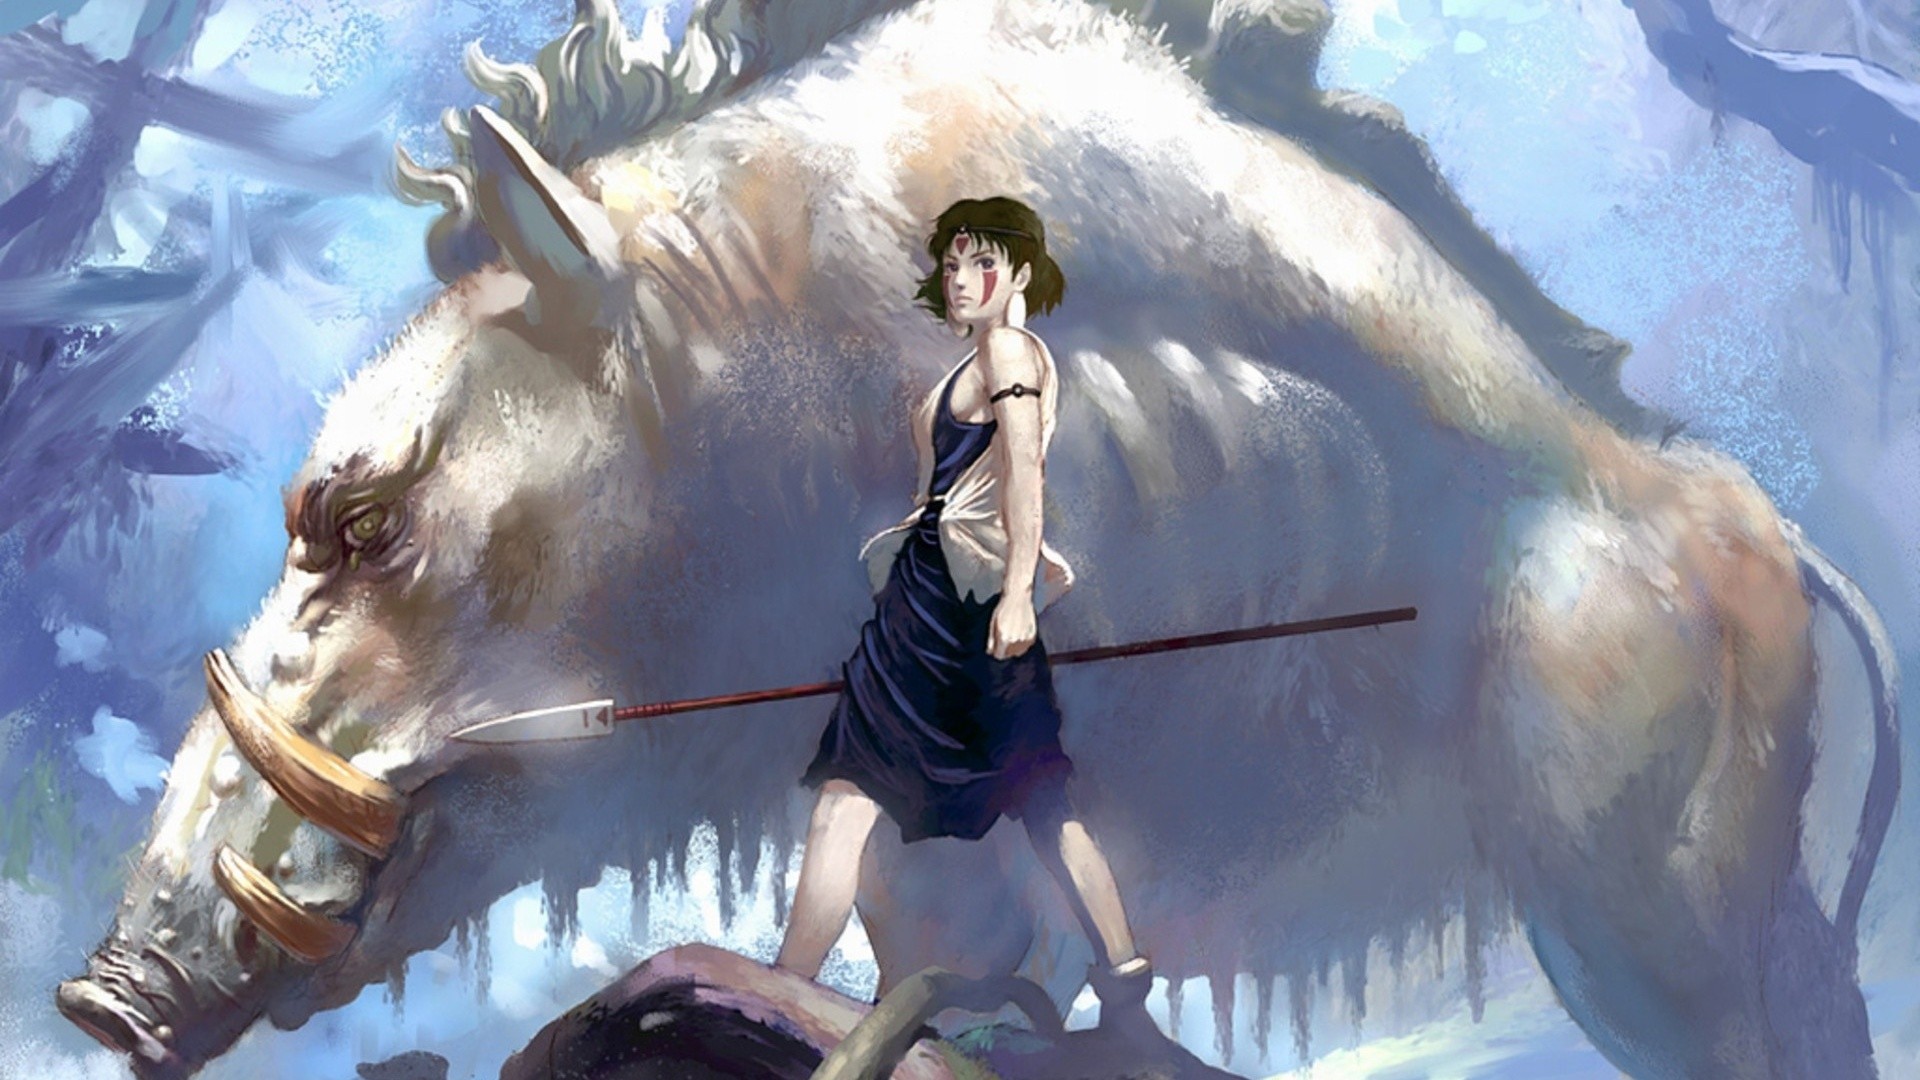 Anime 1920x1080 Studio Ghibli Princess Mononoke anime anime girls fantasy girl weapon spear fantasy art